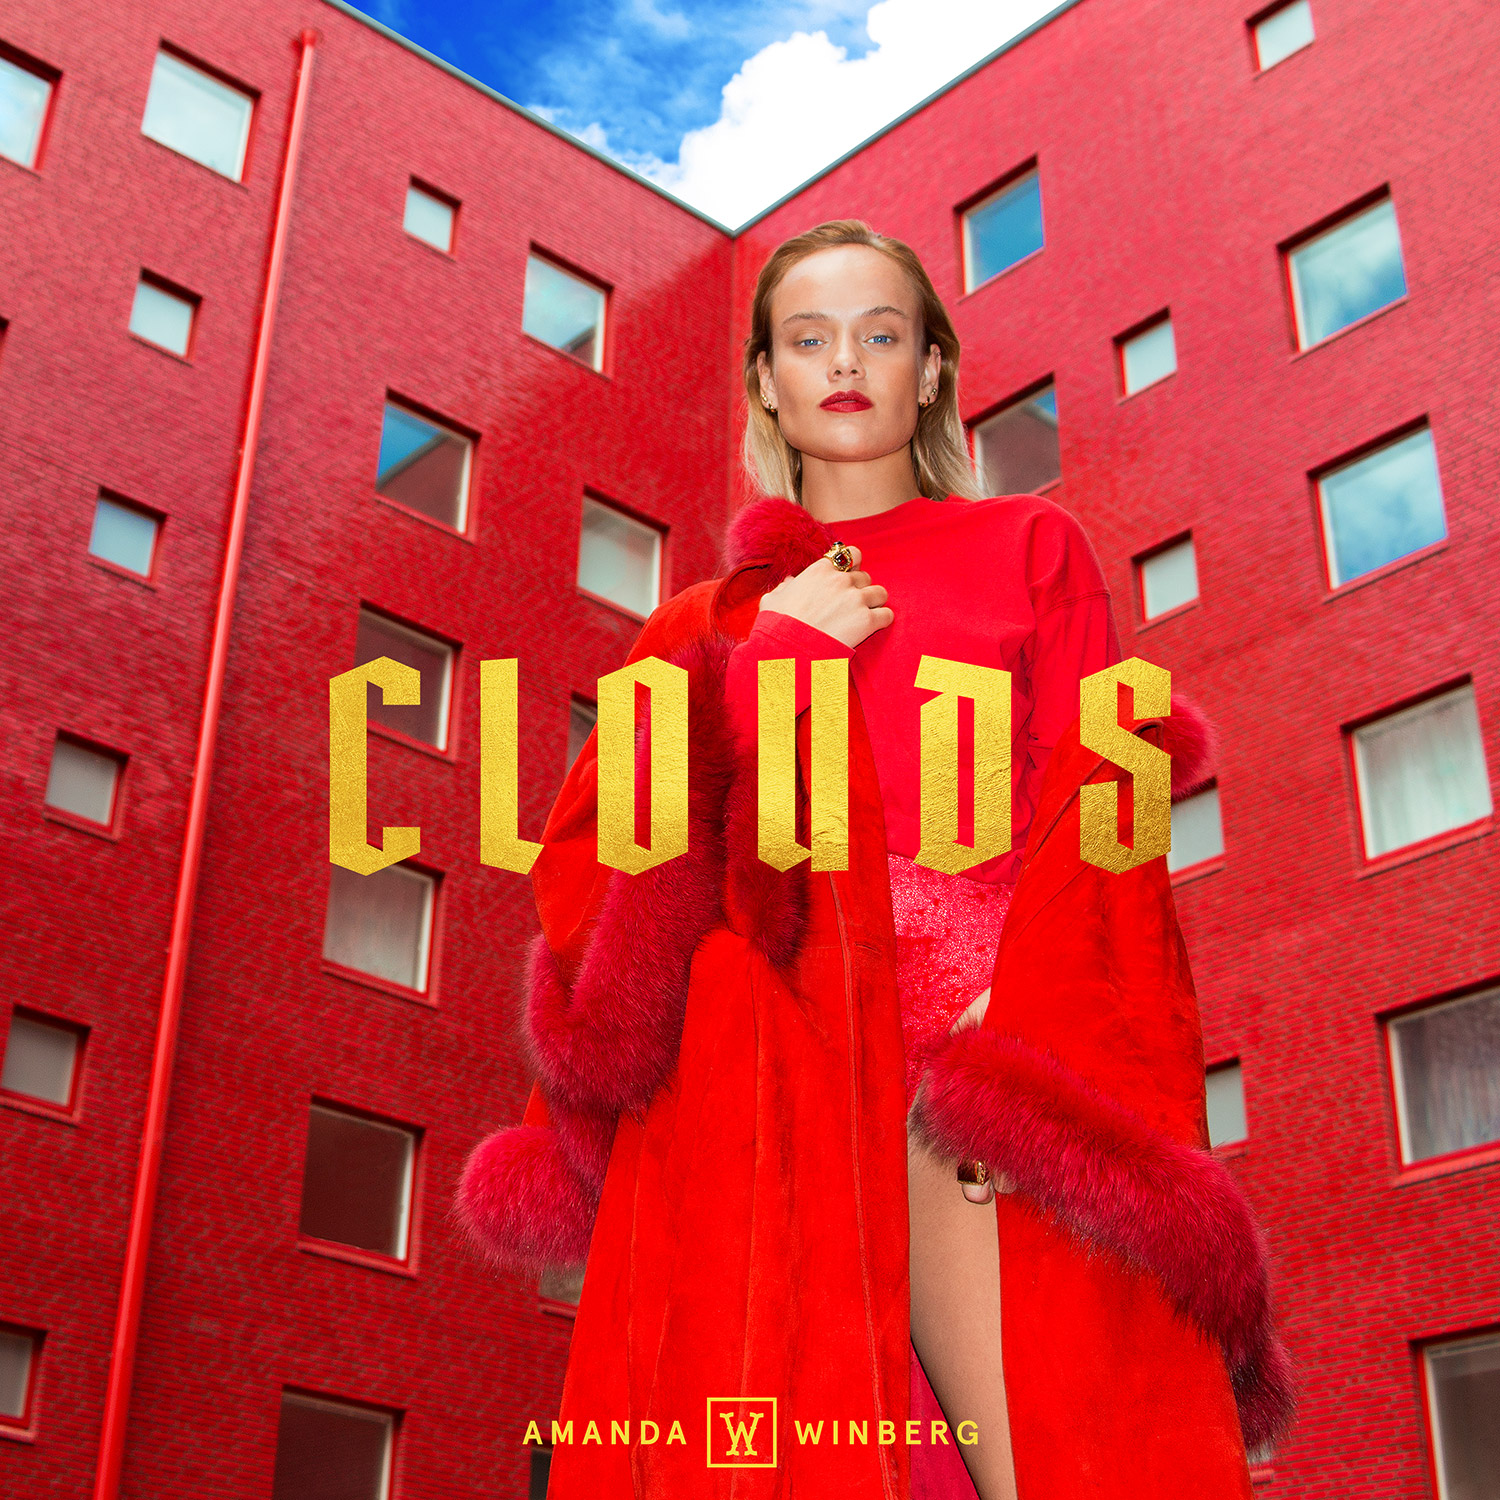 AmandaWinberg-Clouds-Final-1500×1500-1